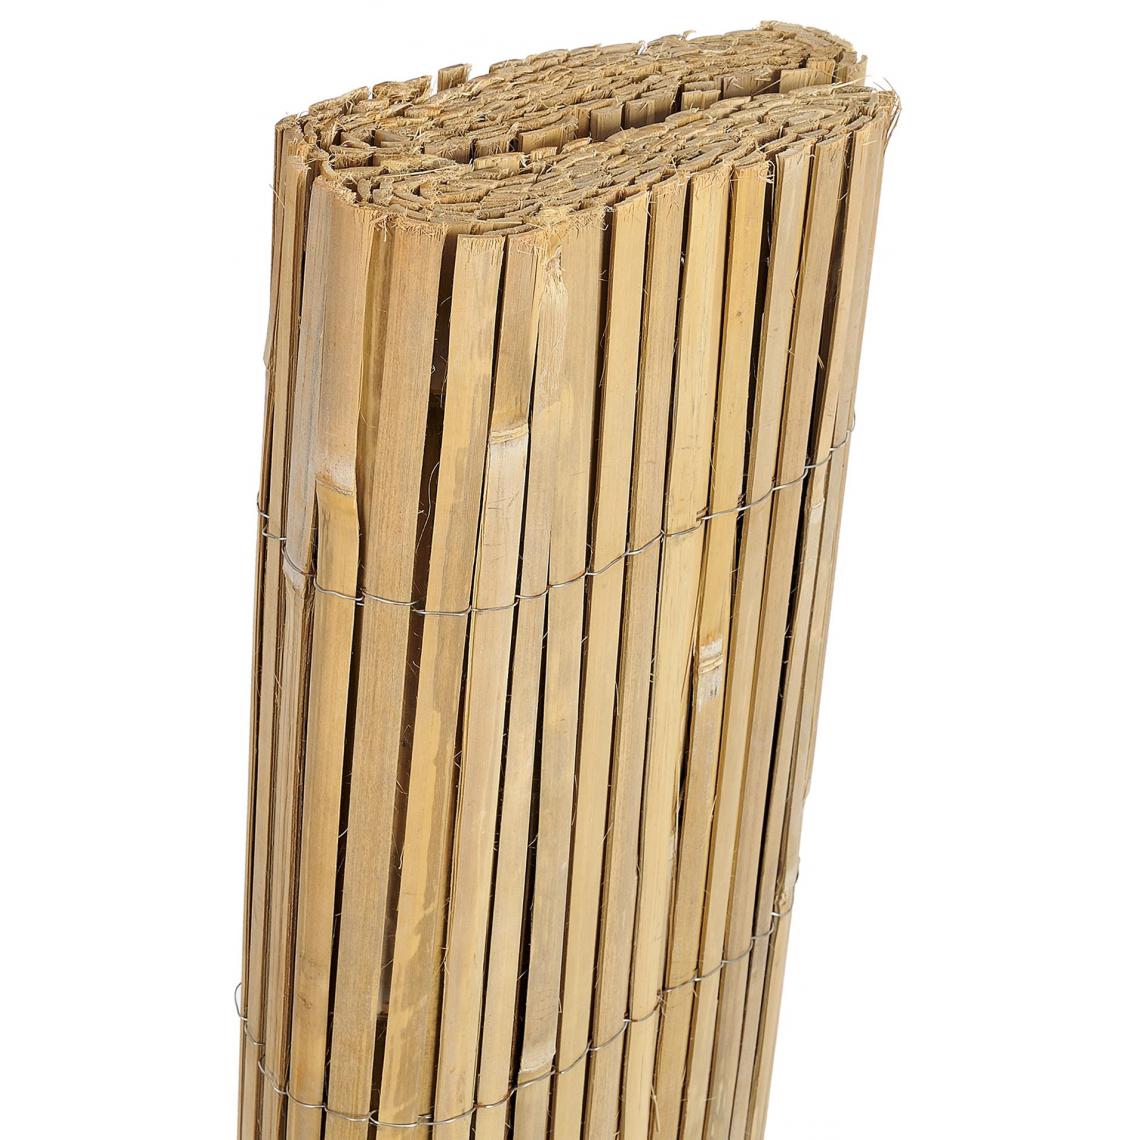 Sodipa - Canisse en bambou refendu 5x2m - Claustras